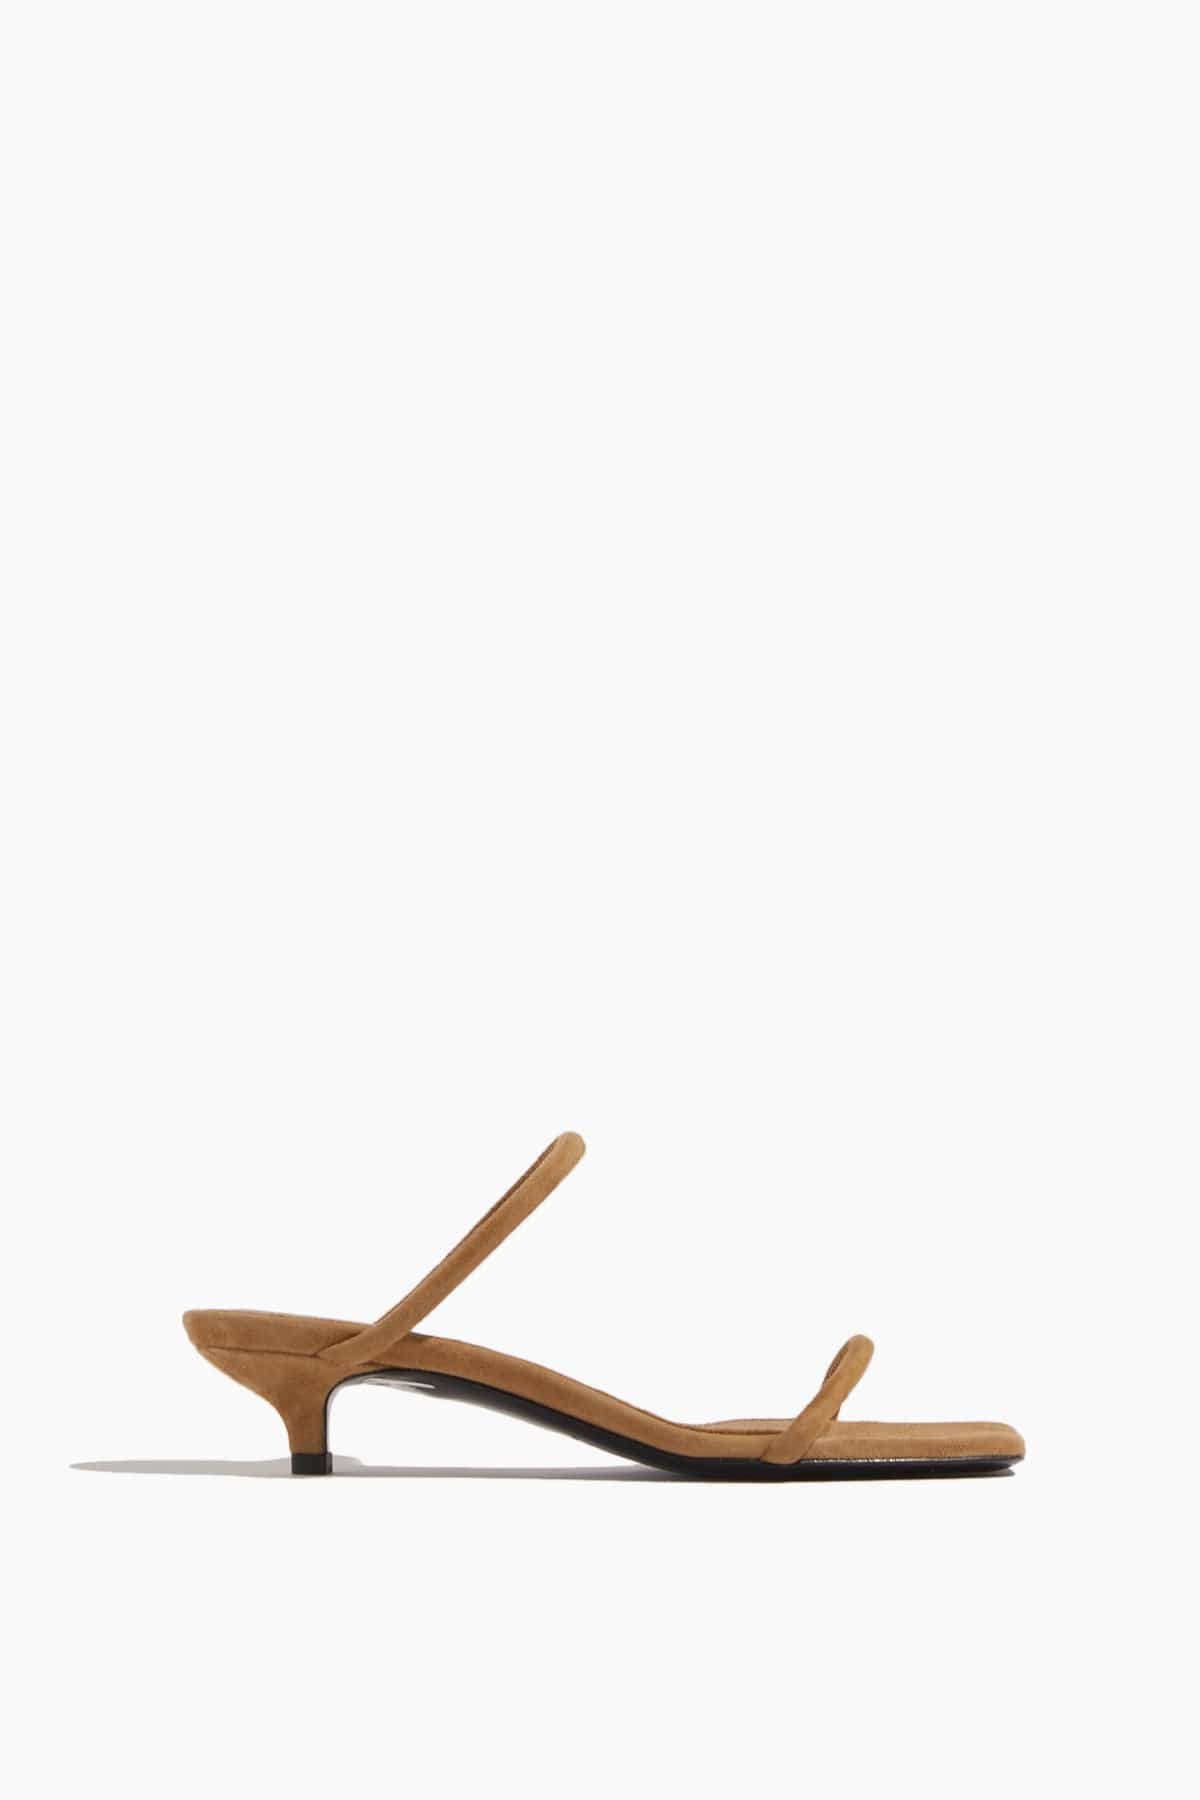 The Minimalist Sandal in Caramel - 1